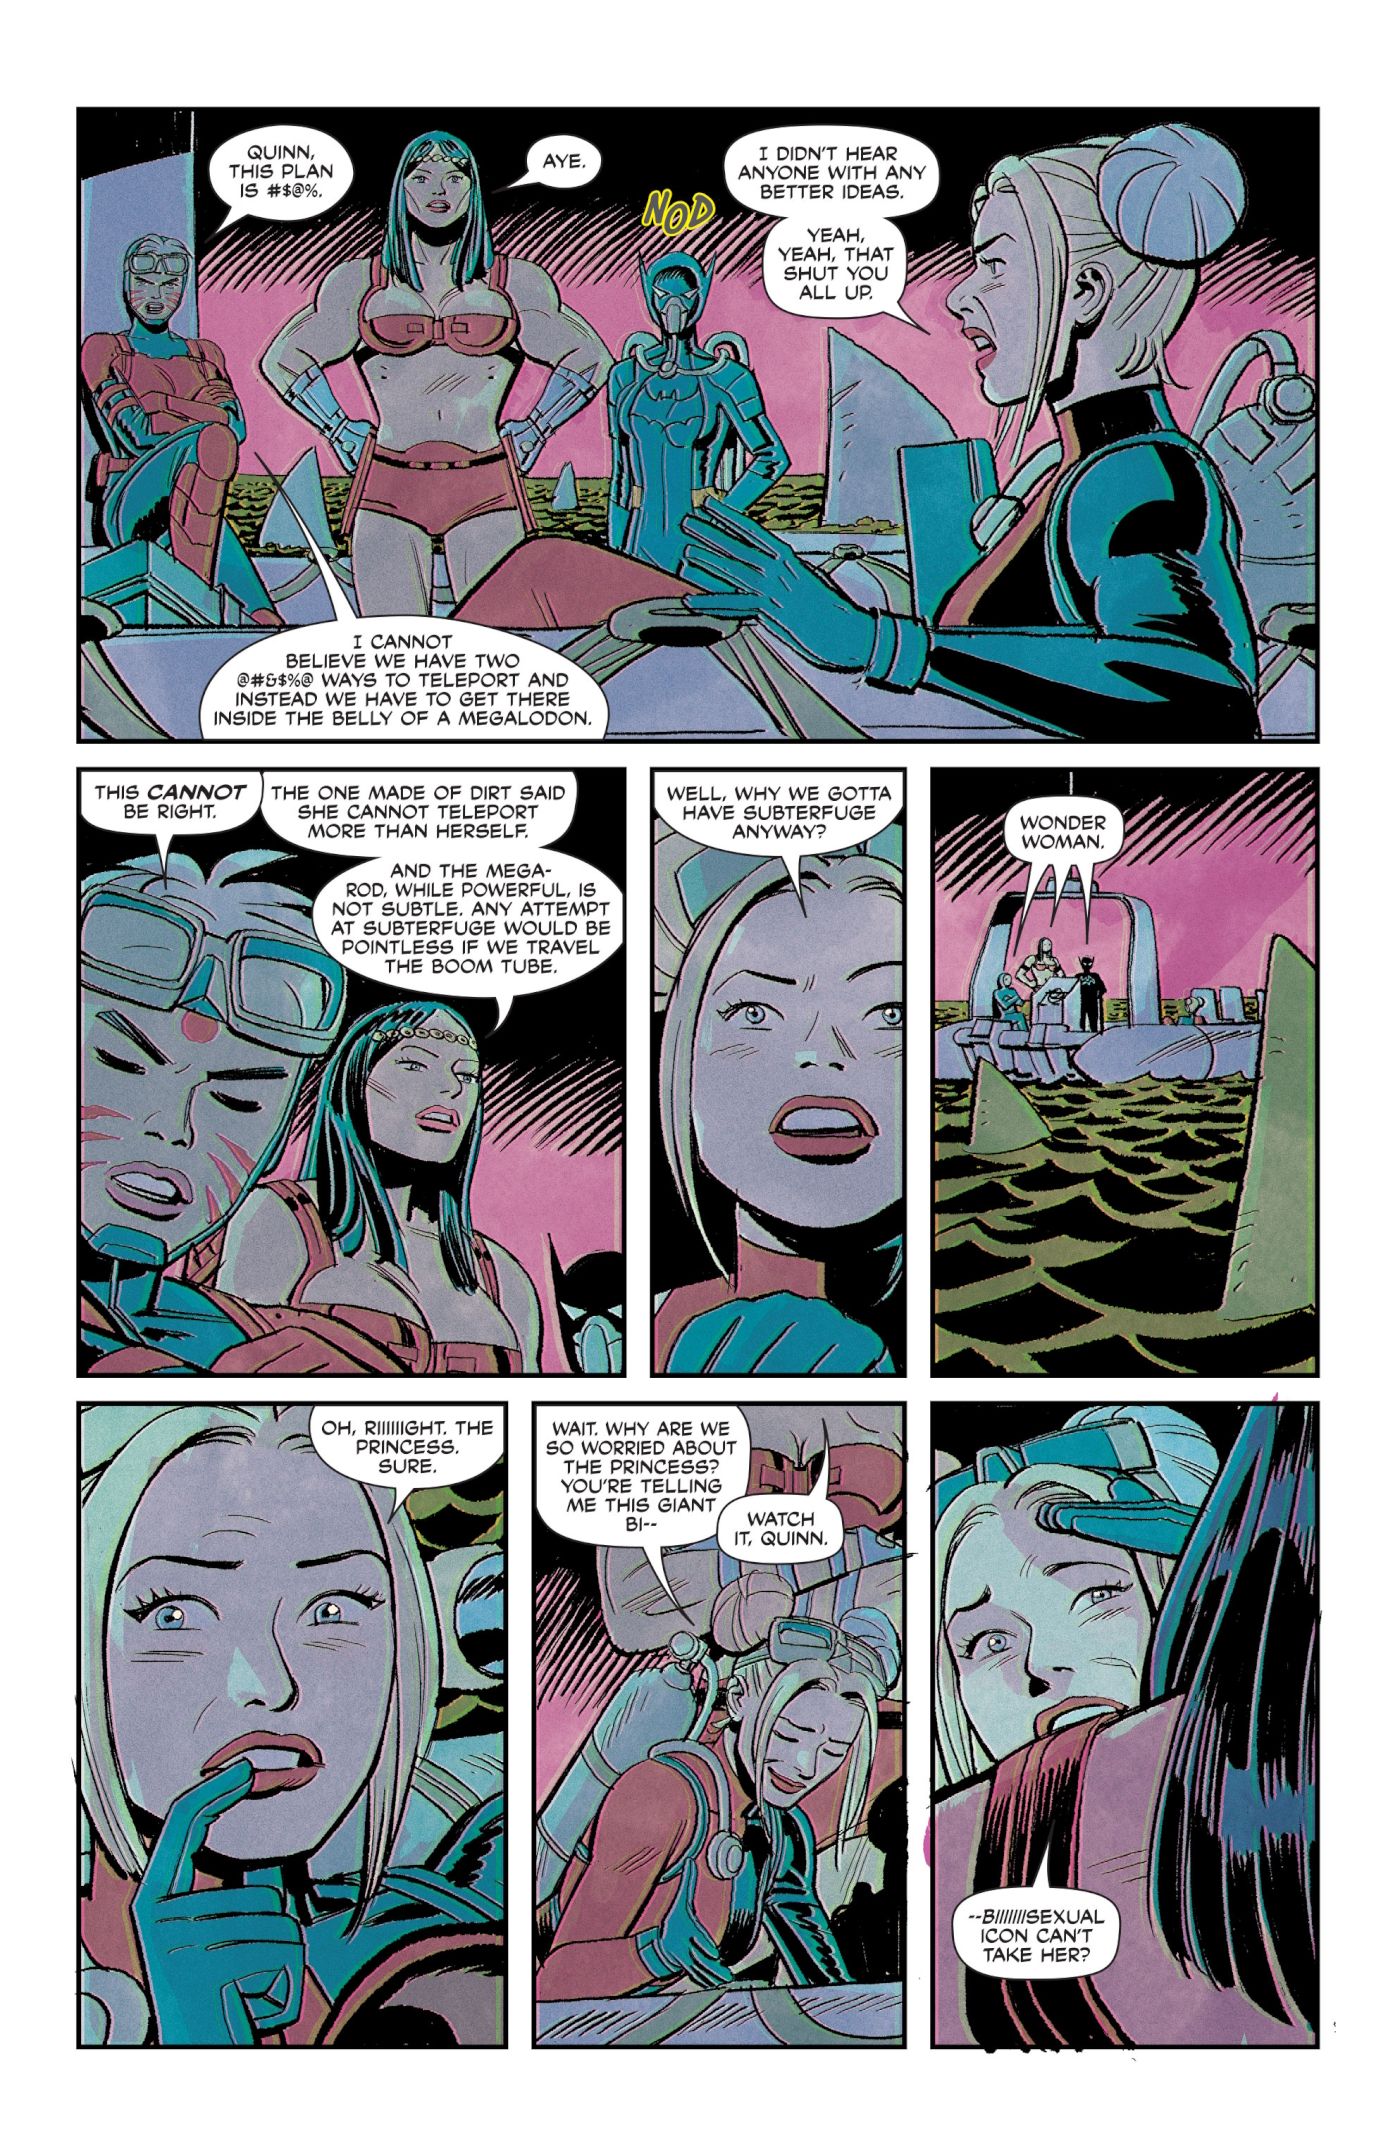 Birds of Prey #3 preview, Harley Quinn has a plan